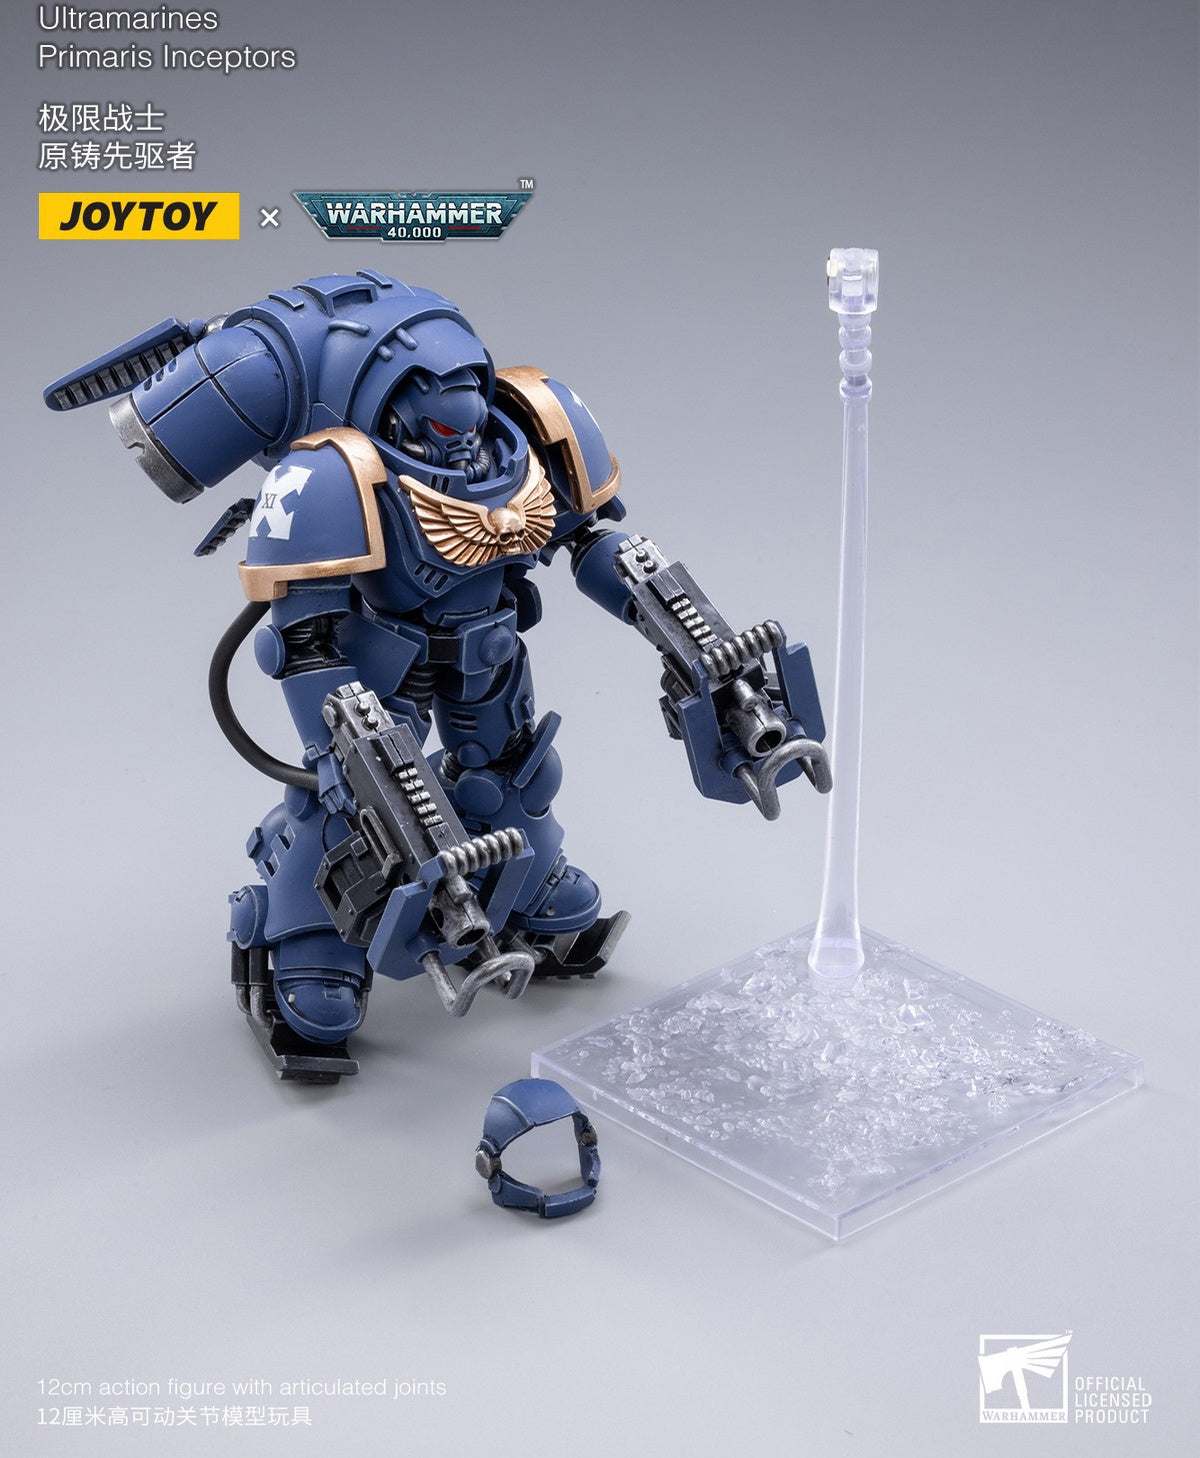 1/18 Joytoy x Warhammer 40000 Ultramarines Primaris Inceptors